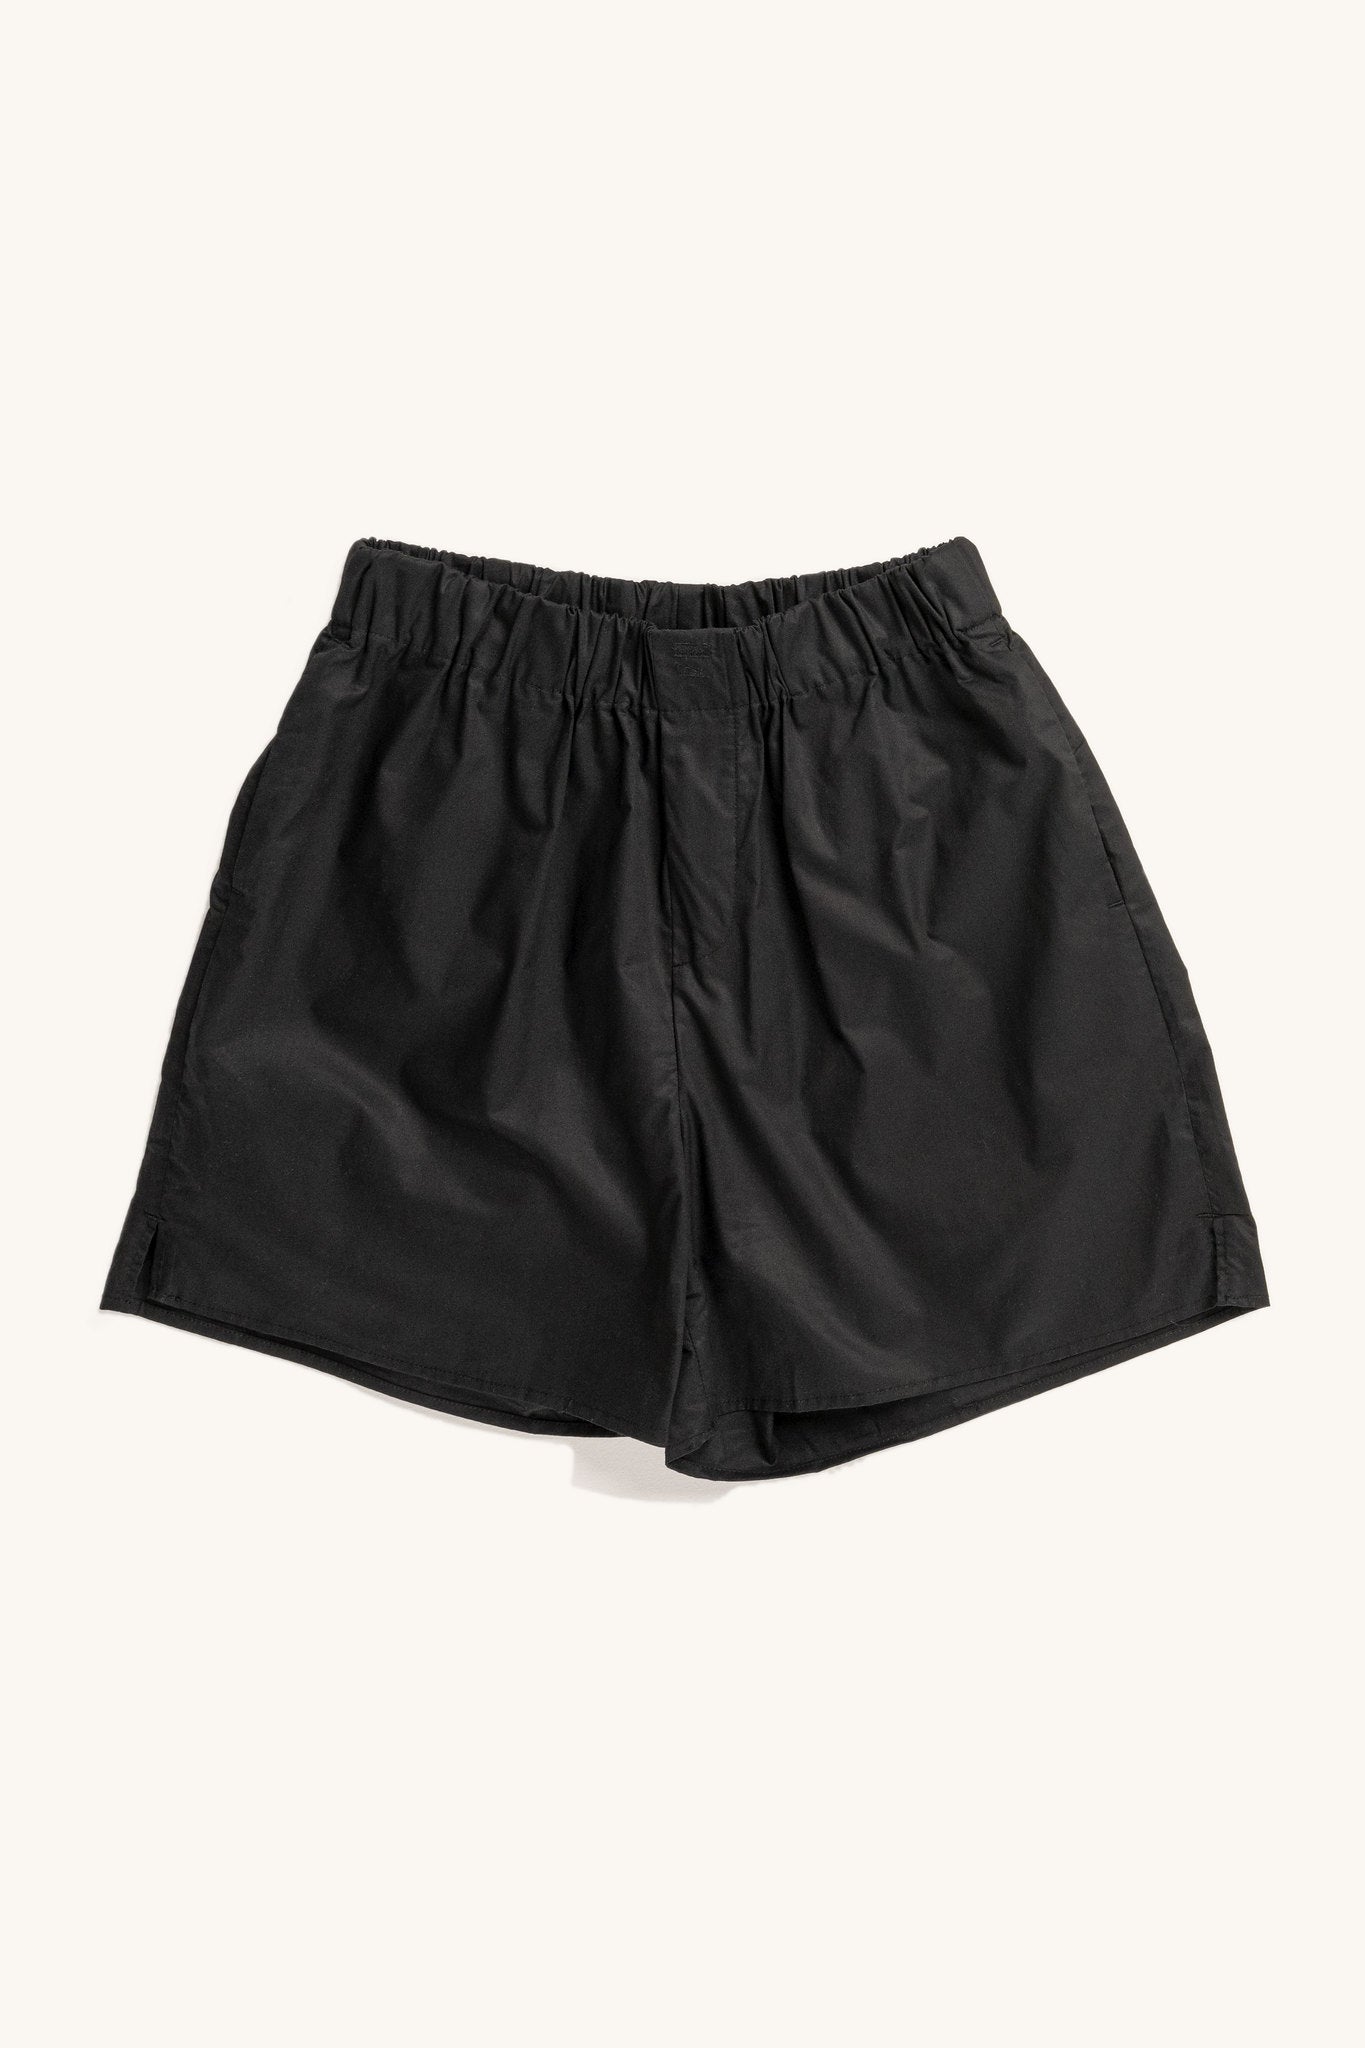 Unisex Boxer Shorts - Ebony - G R A Y E